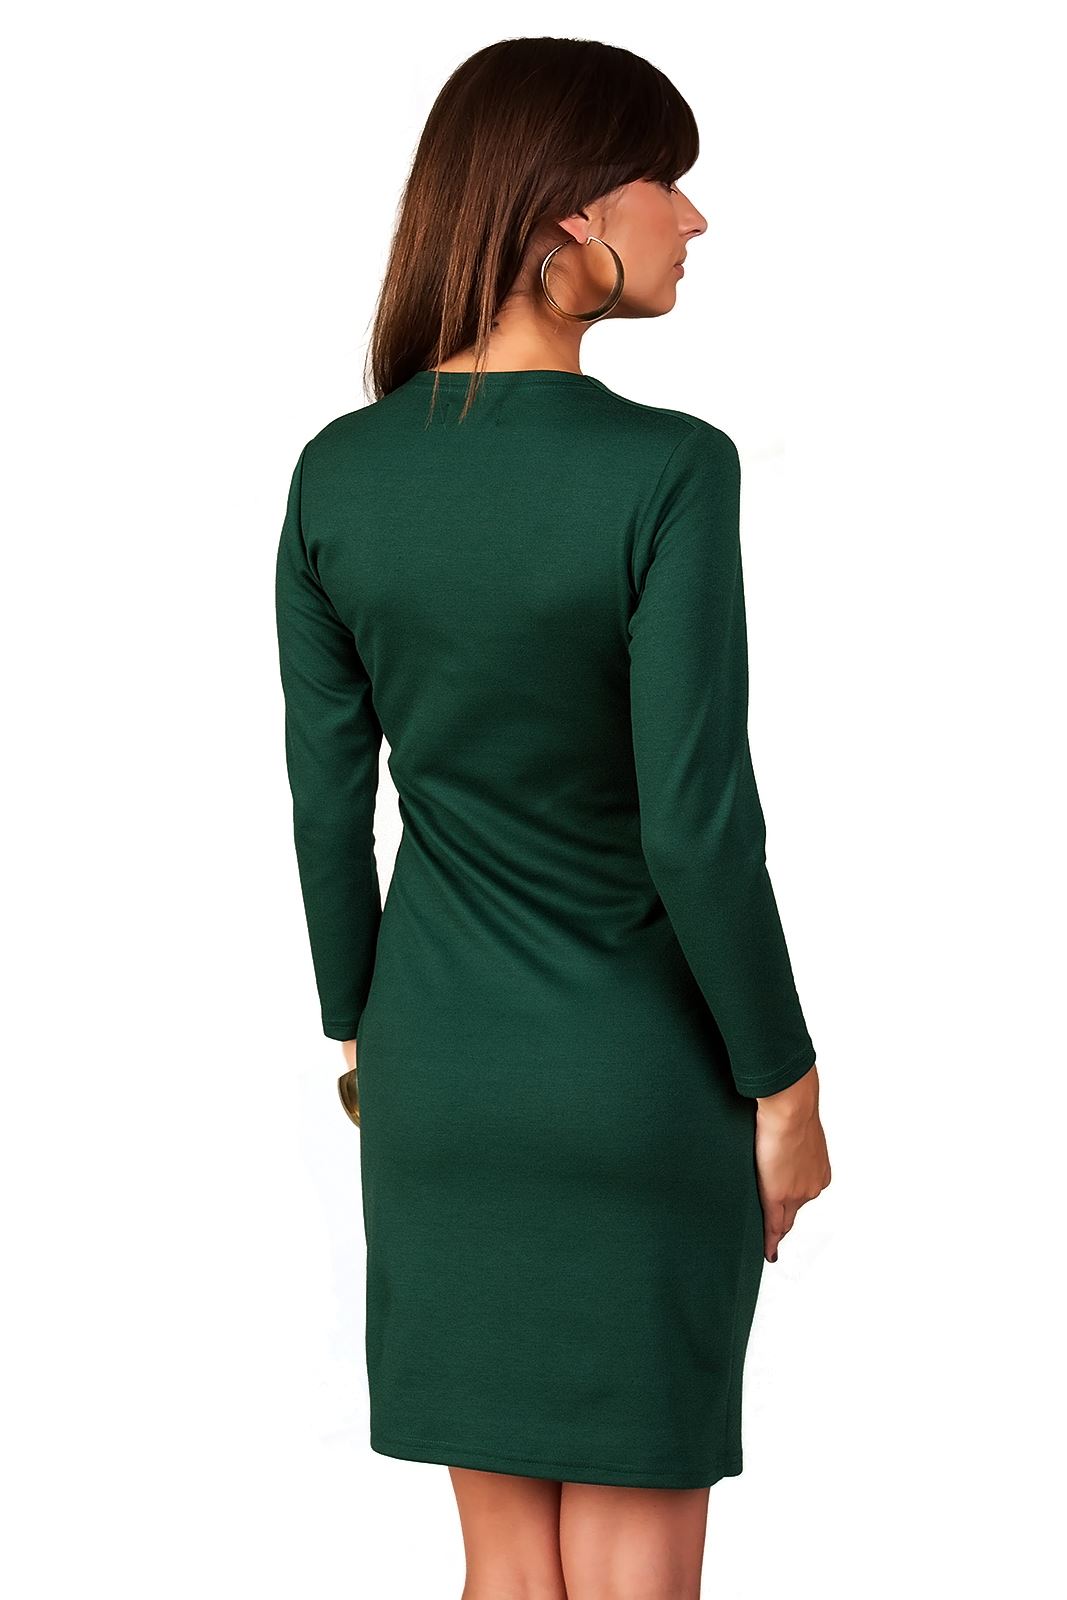 Rebeka's dark green dress-Vera Fashion